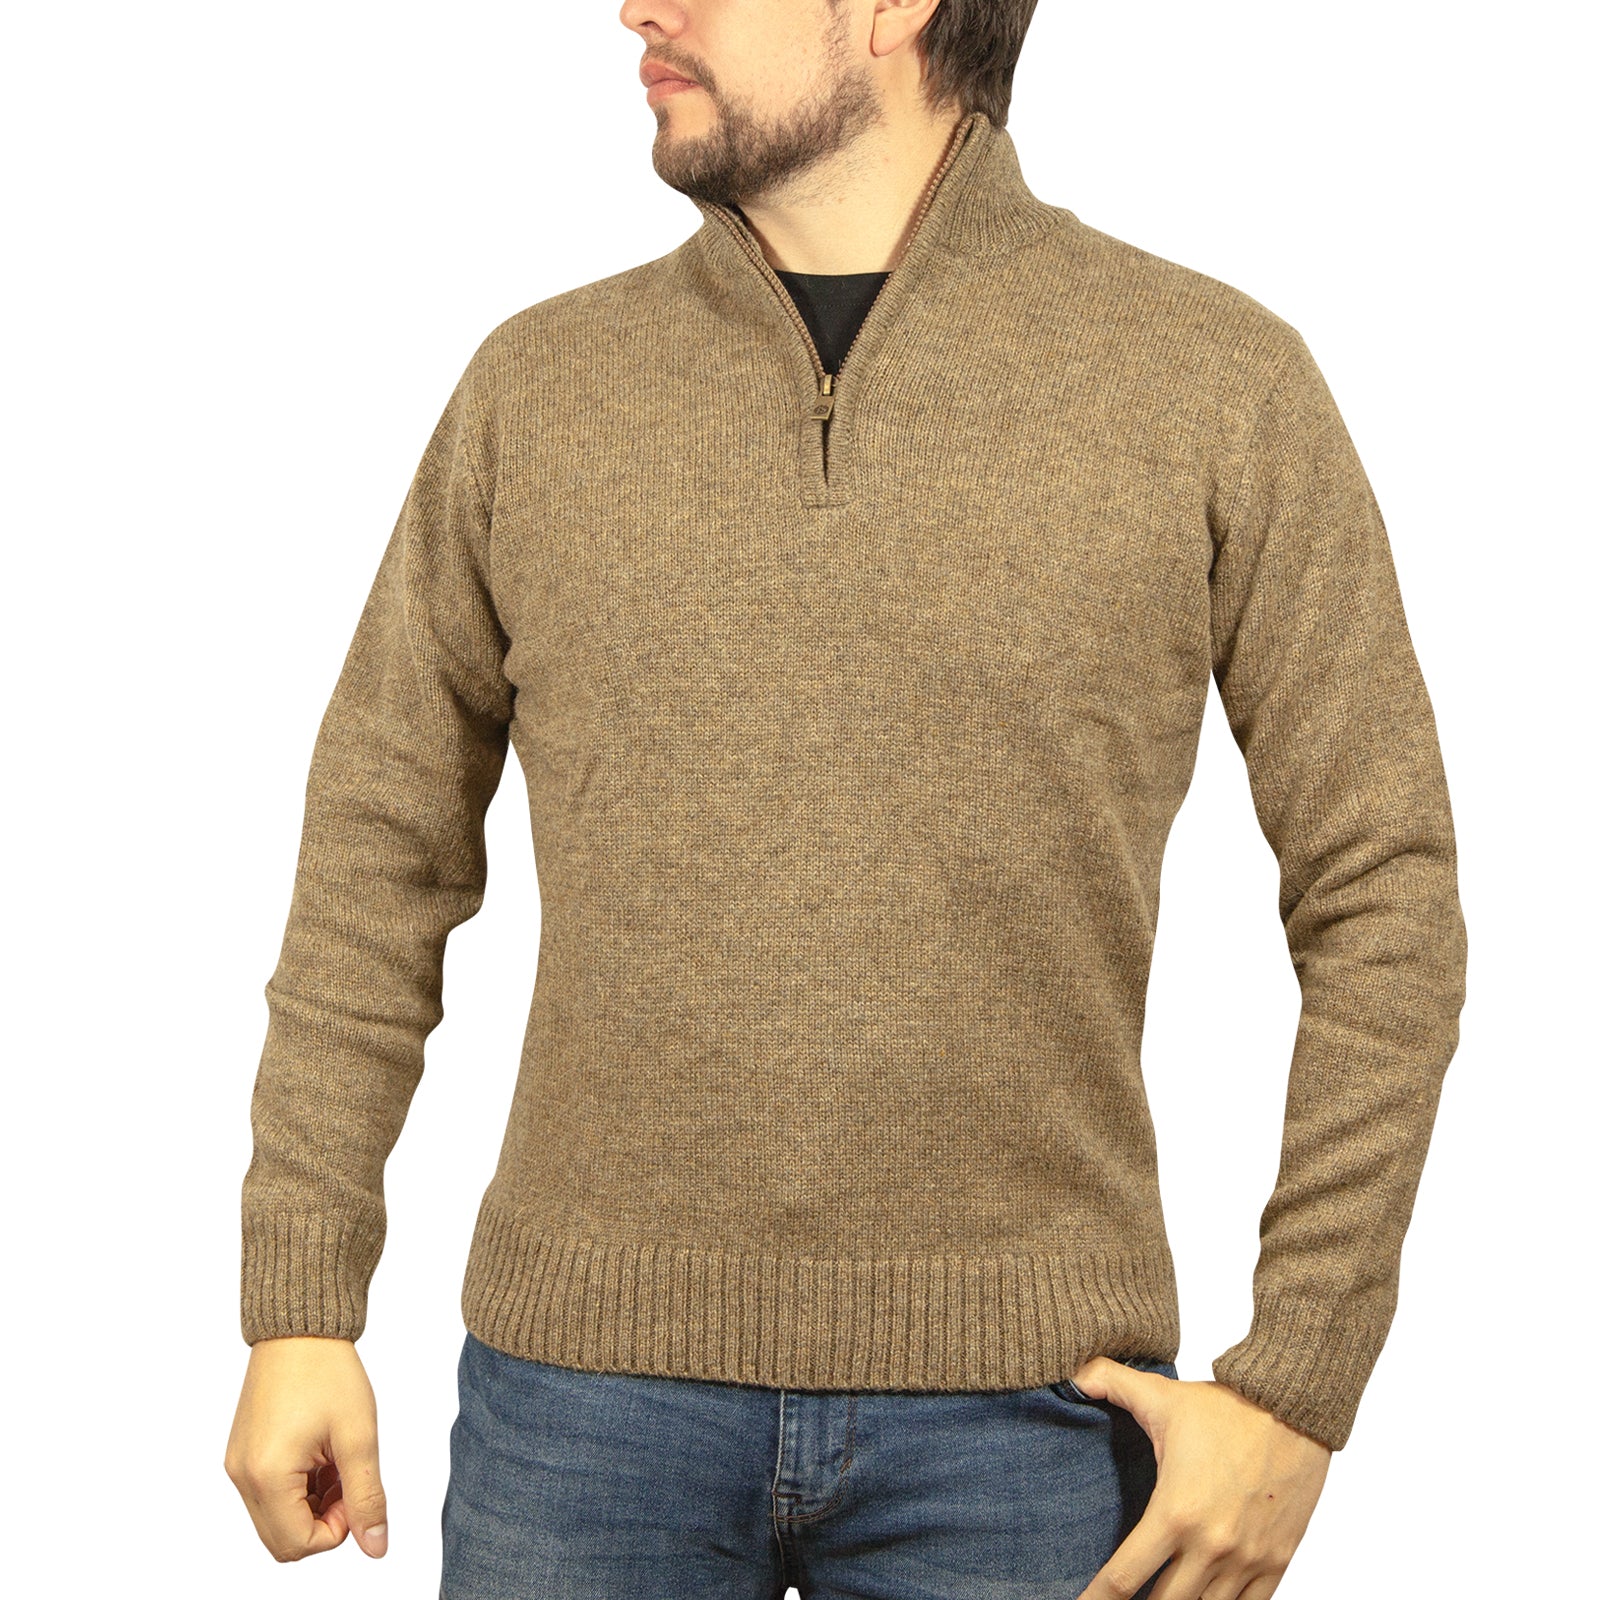 100% SHETLAND WOOL Half Zip Up Knit JUMPER Pullover Mens Sweater Knitted - Nutmeg (23) - S - 0